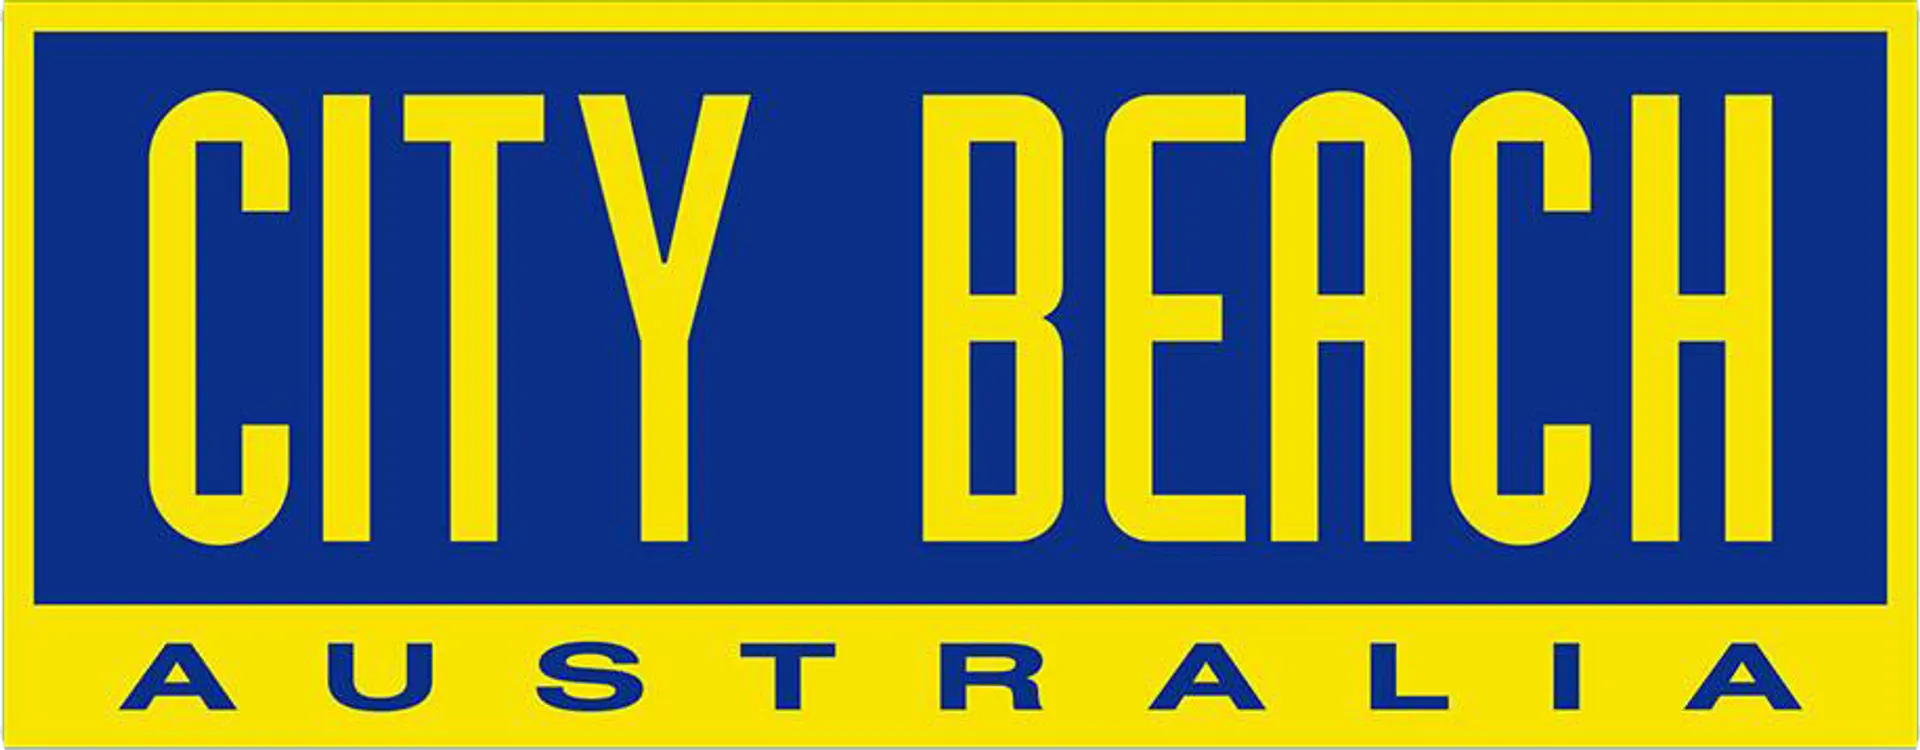 CITY BEACH logo of current catalogue